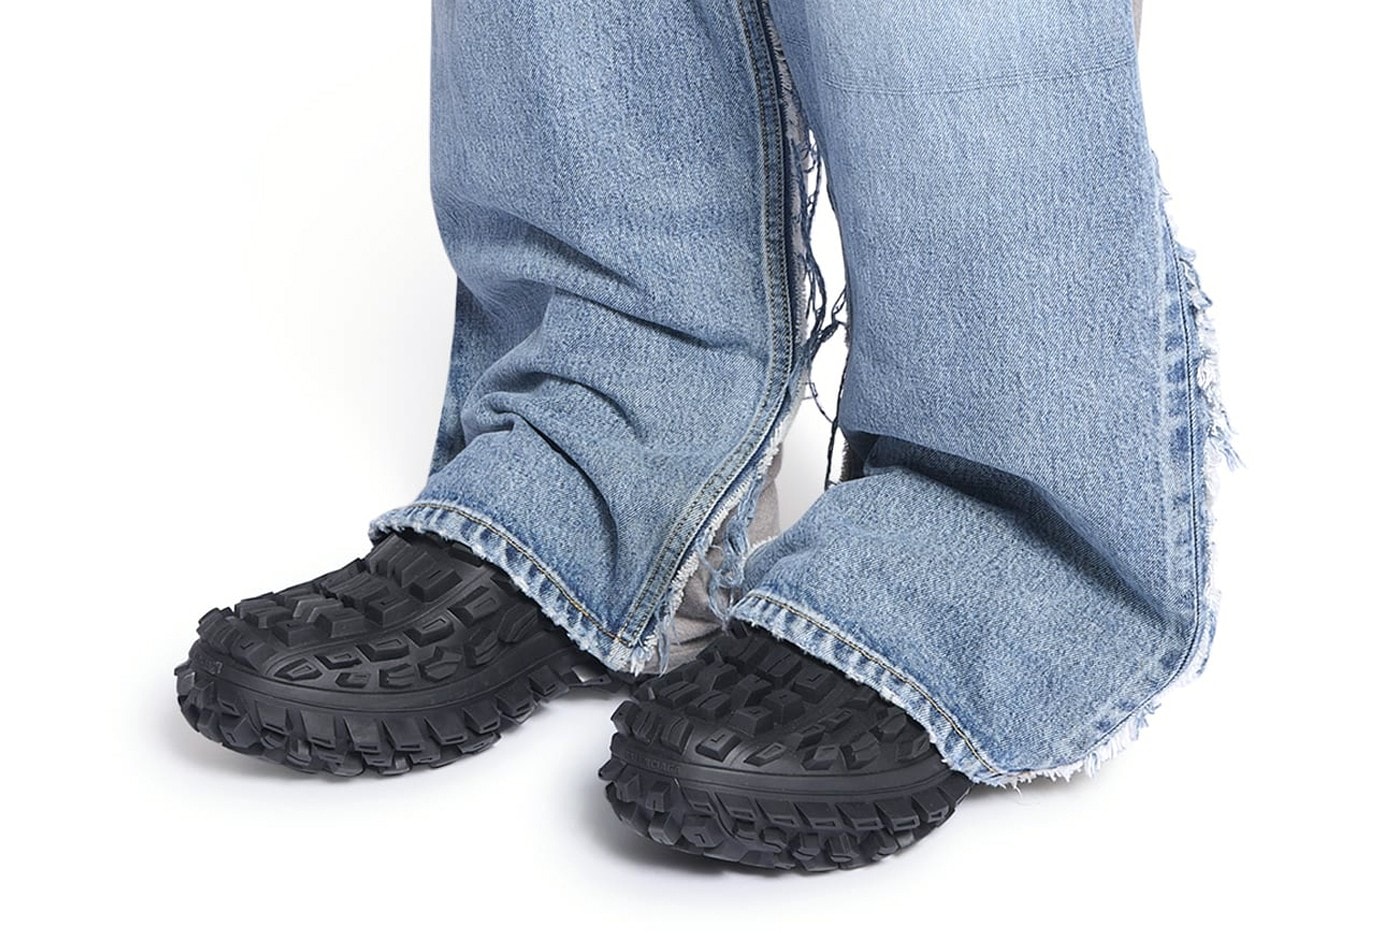 Balenciaga 全新鞋款「Defender Extreme Tire Tread Clogs」正式登場